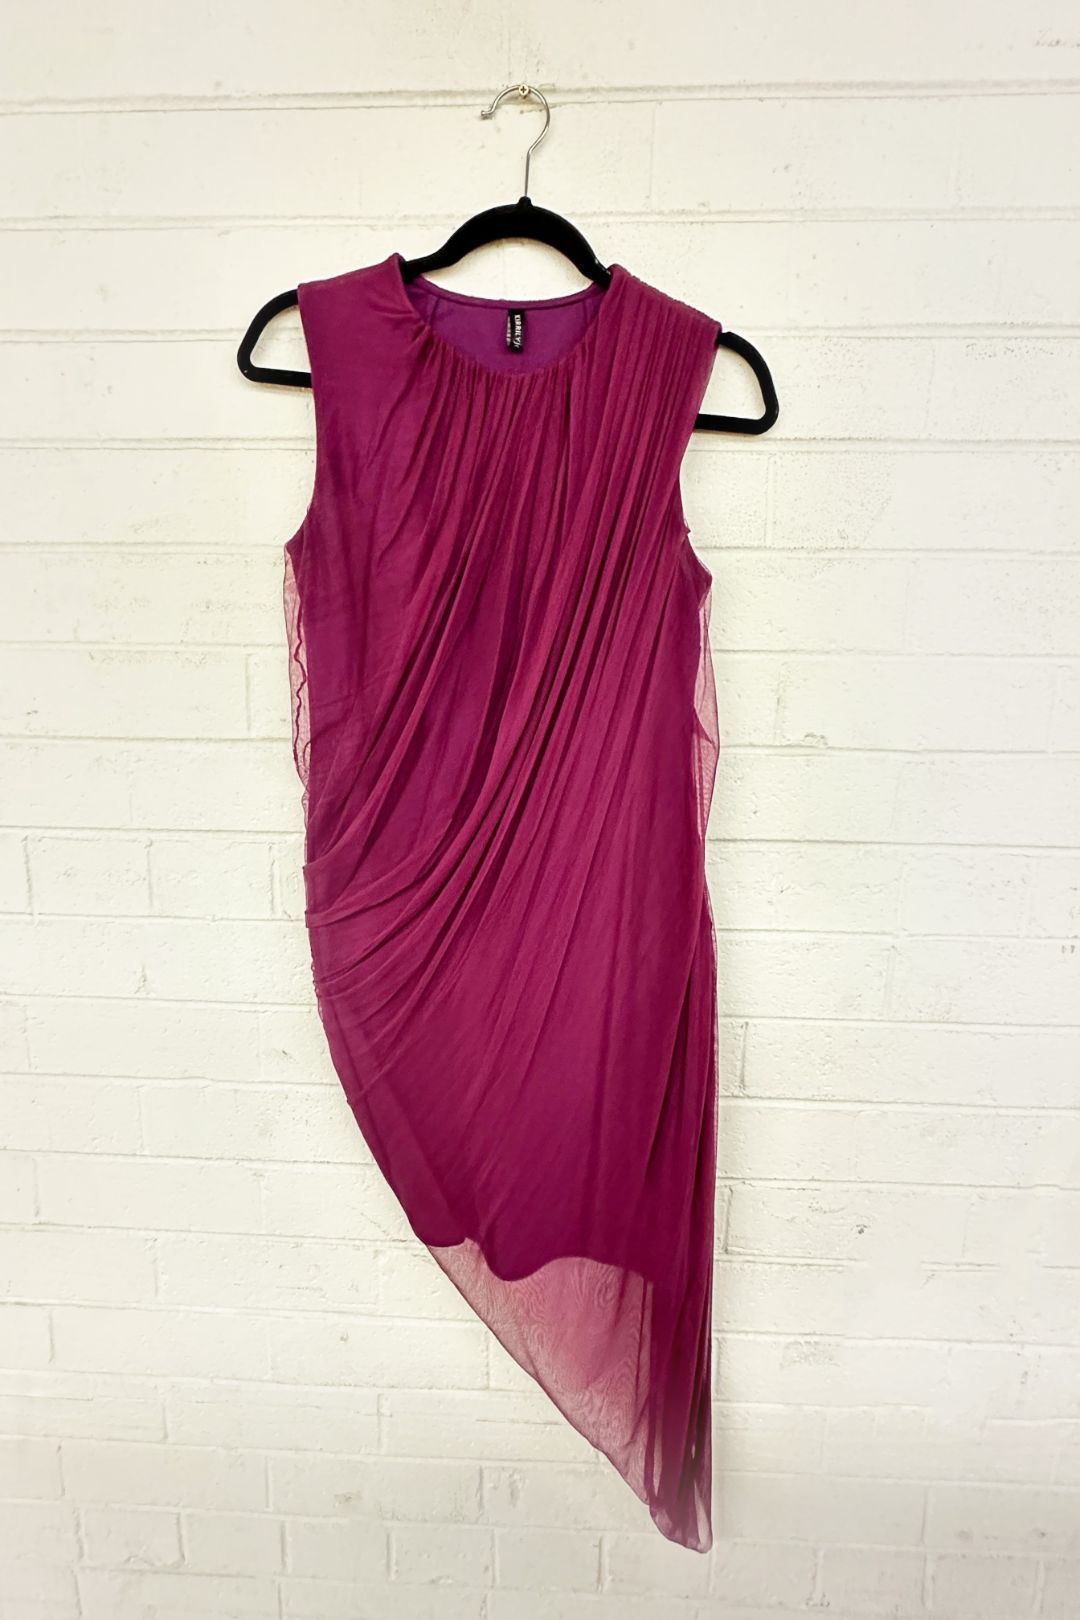 Asymmetric Purple Cocktail Dress